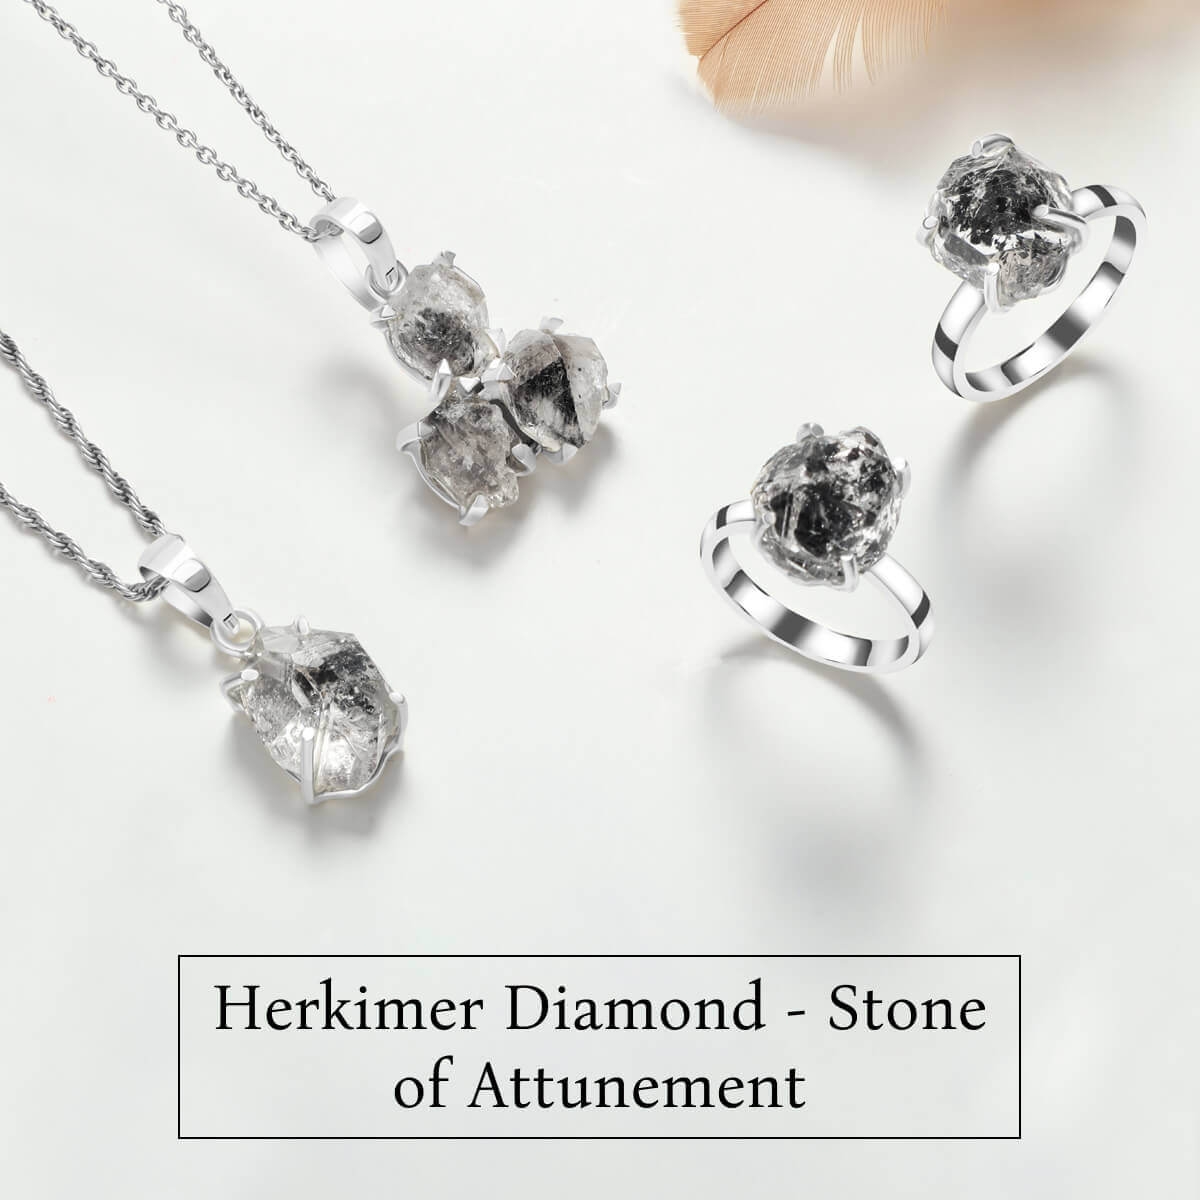 Herkimer diamond jewelry